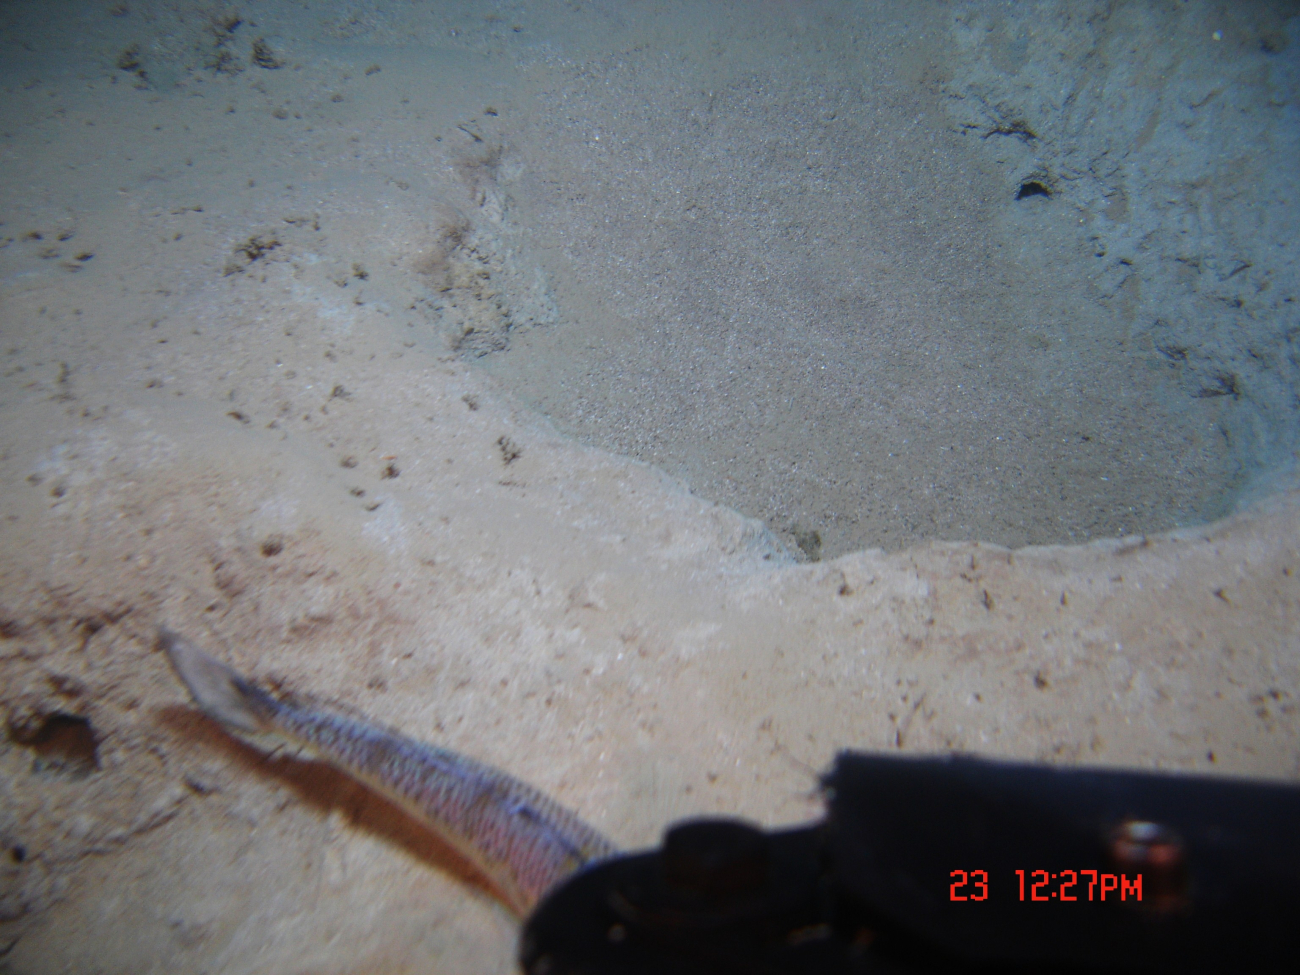 Fish tail near large burrow in sediment